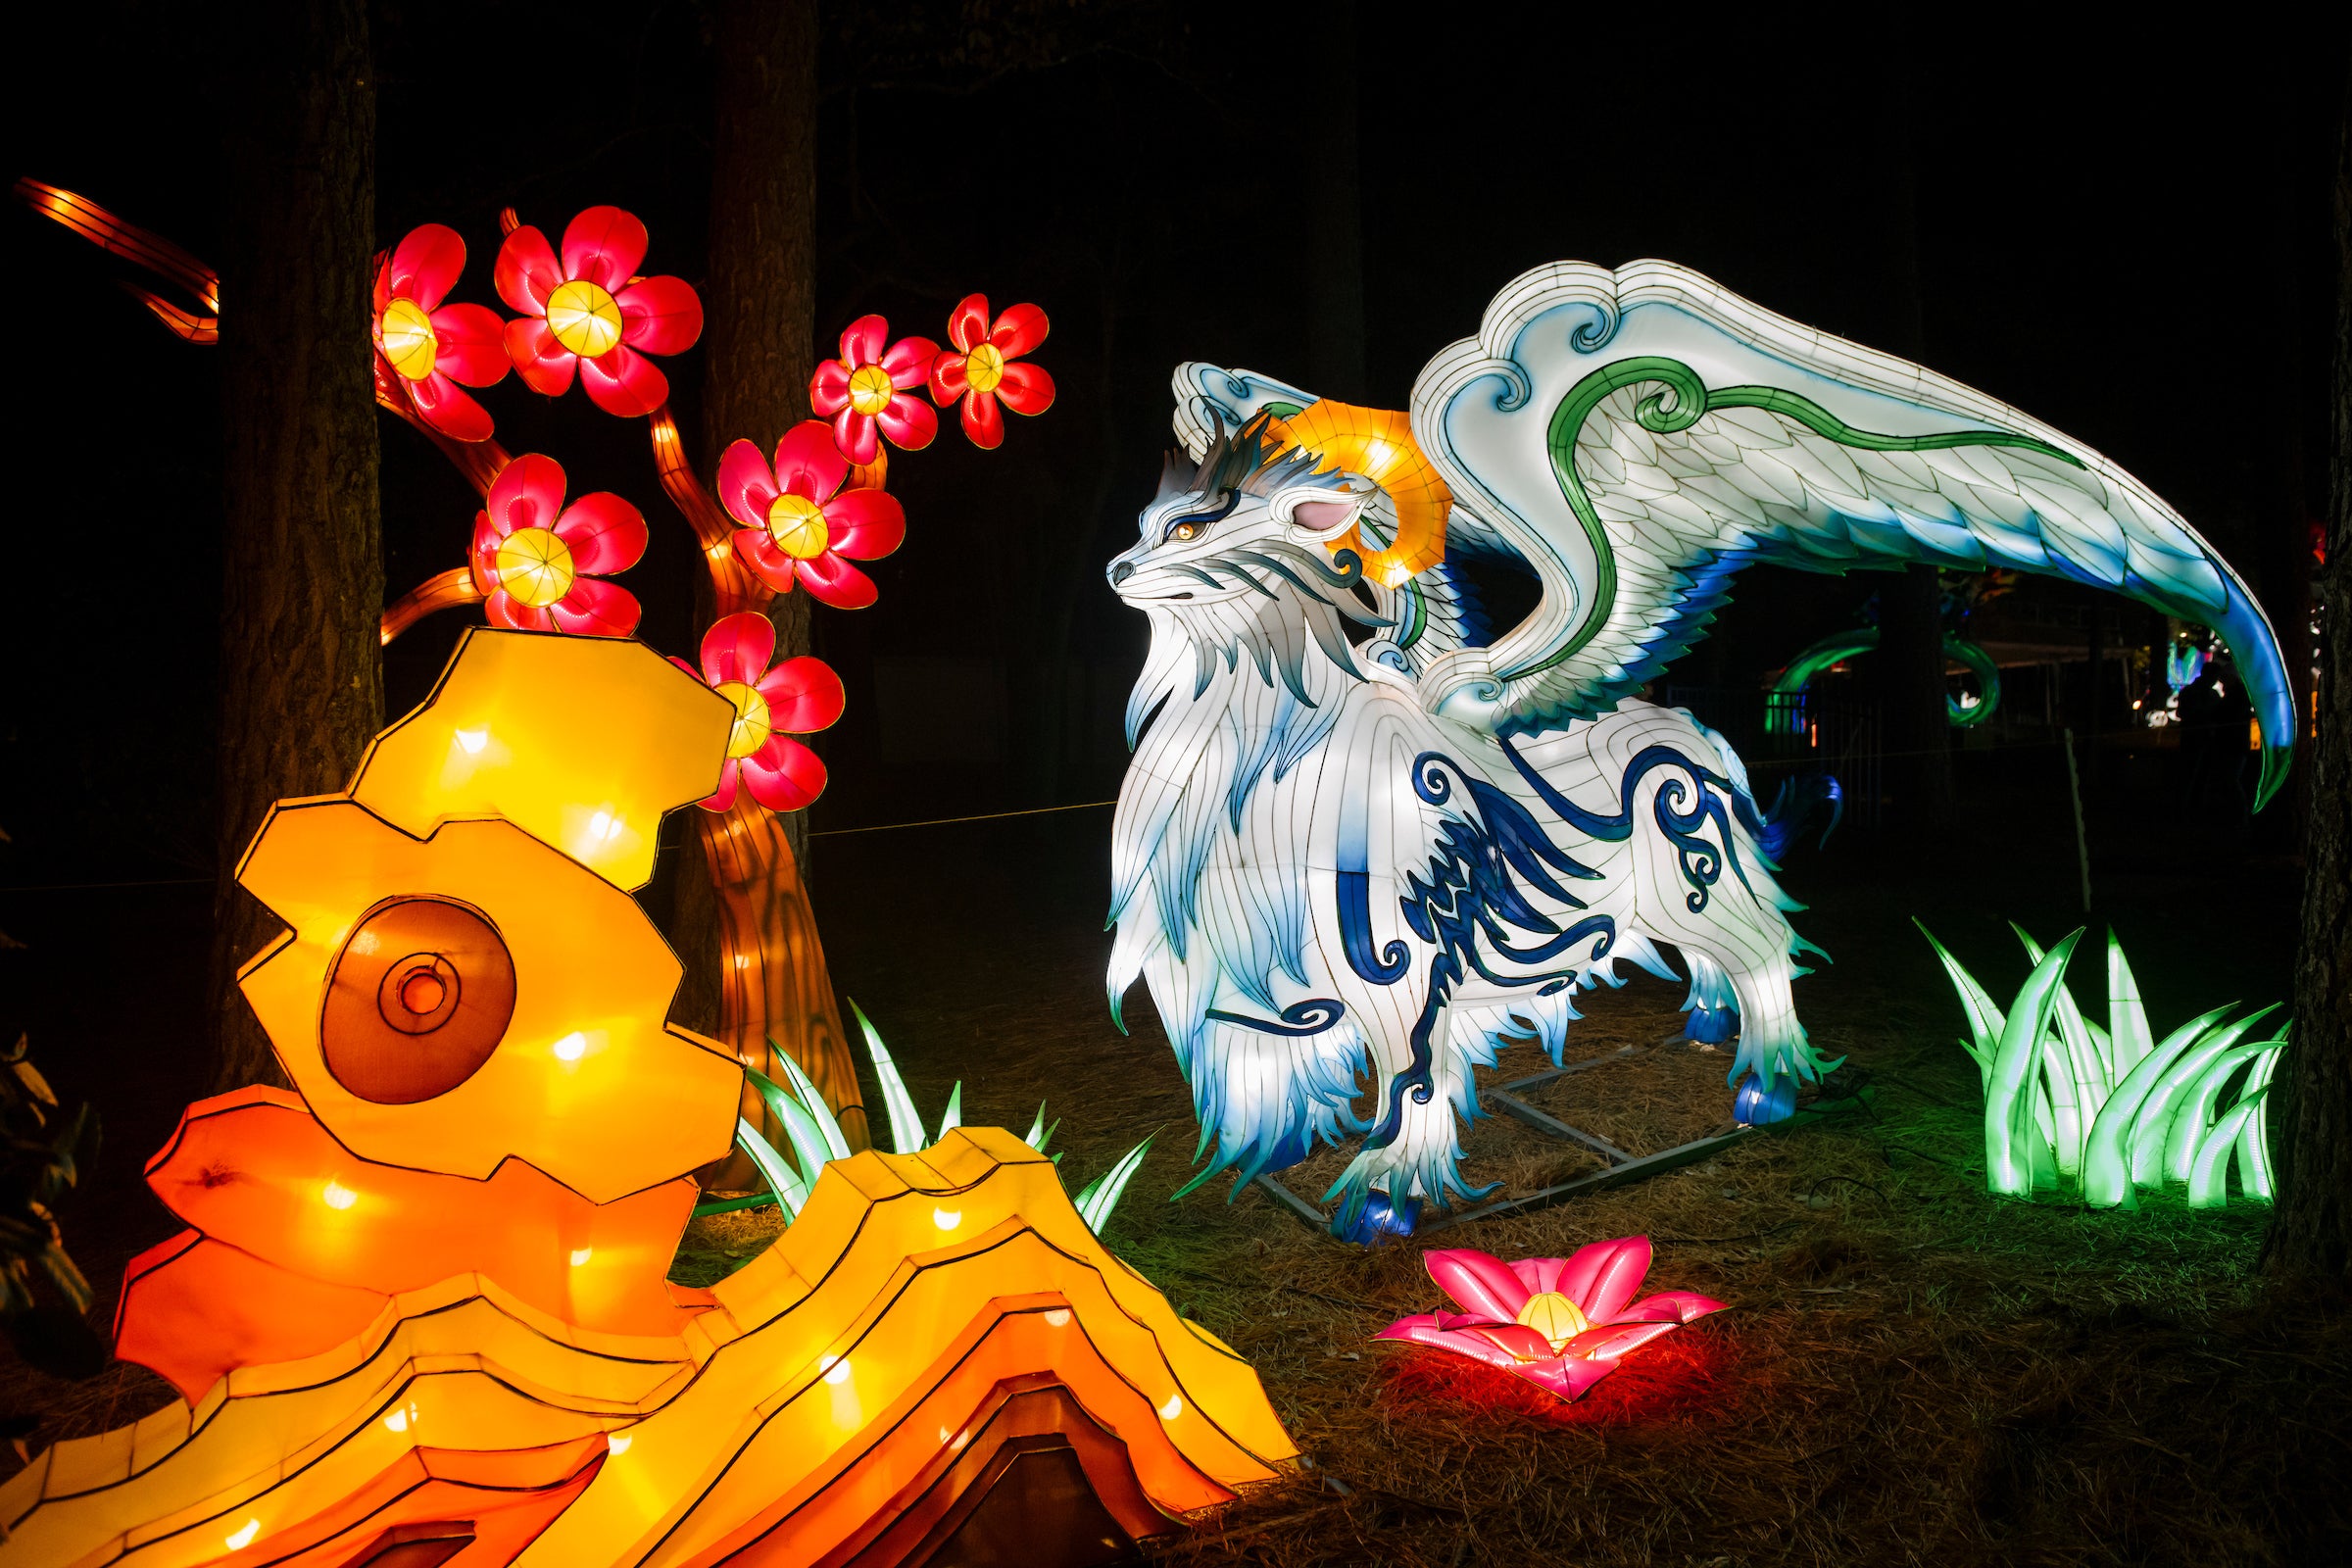 cary chinese lantern festival